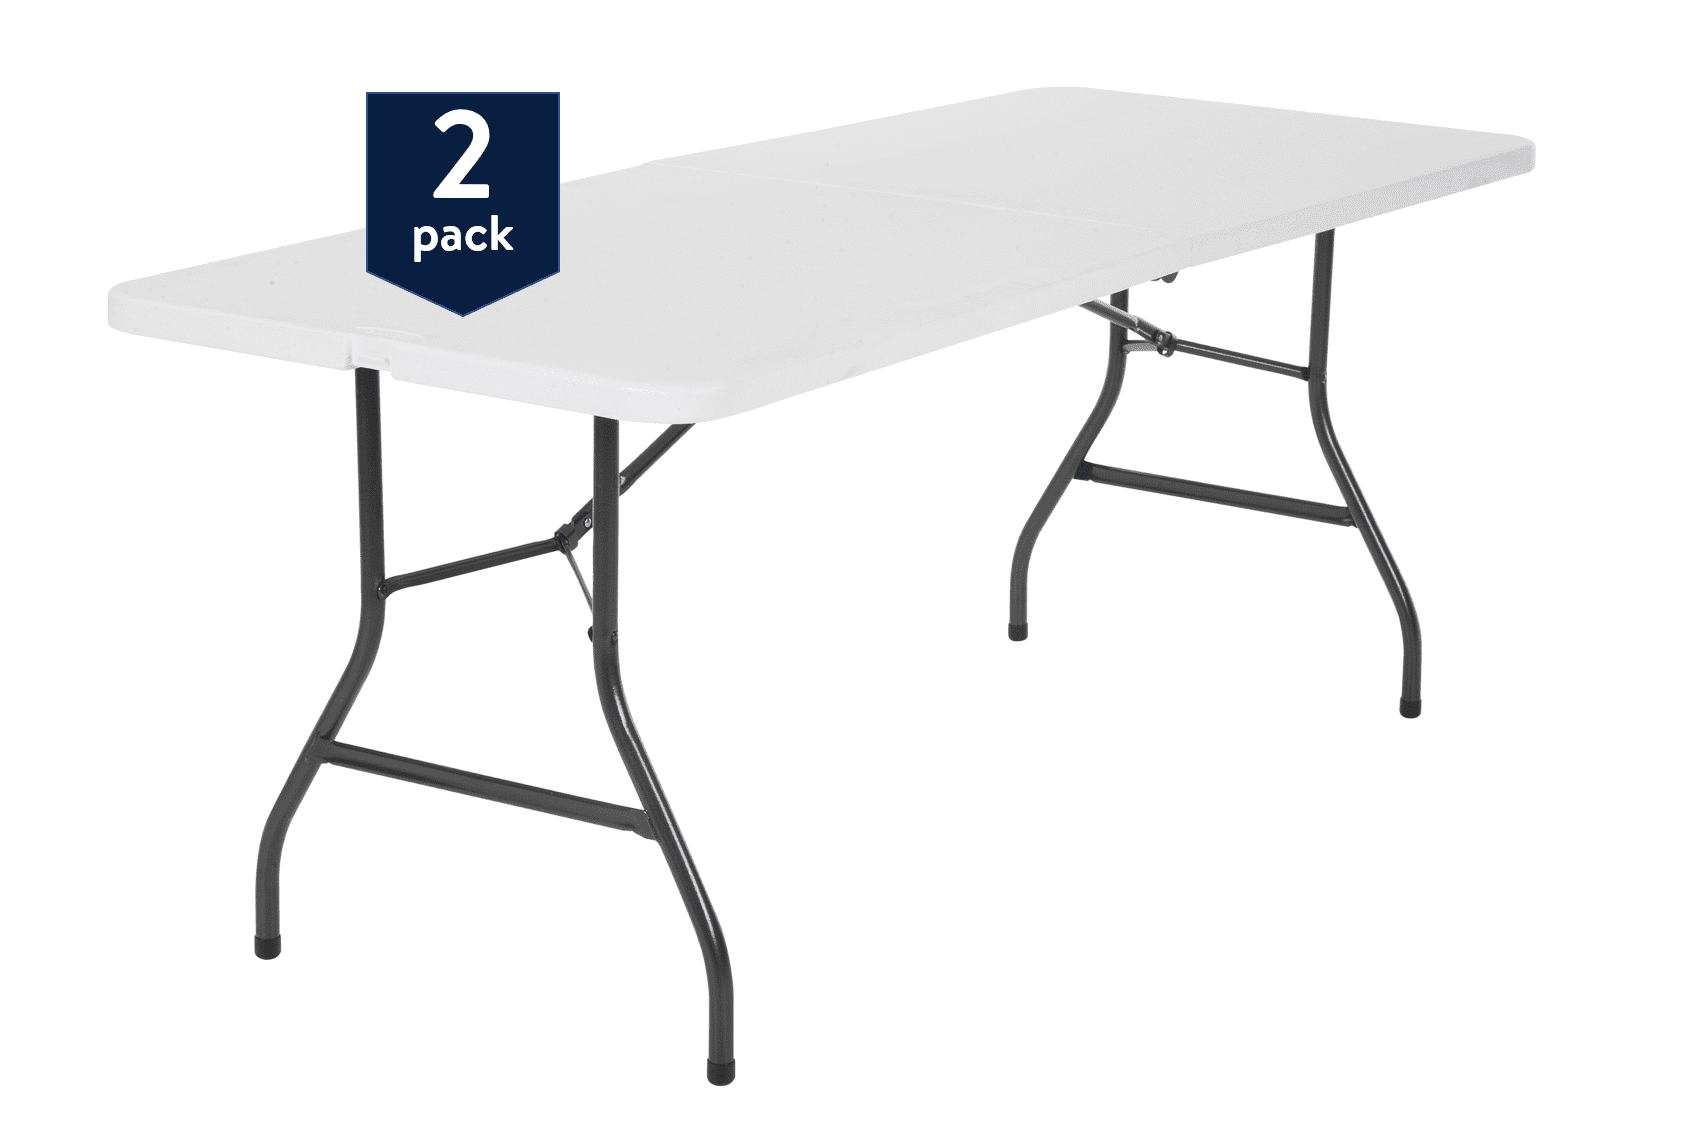 Cosco 20 Pack 20 Foot Centerfold Folding Table, White   Walmart.com